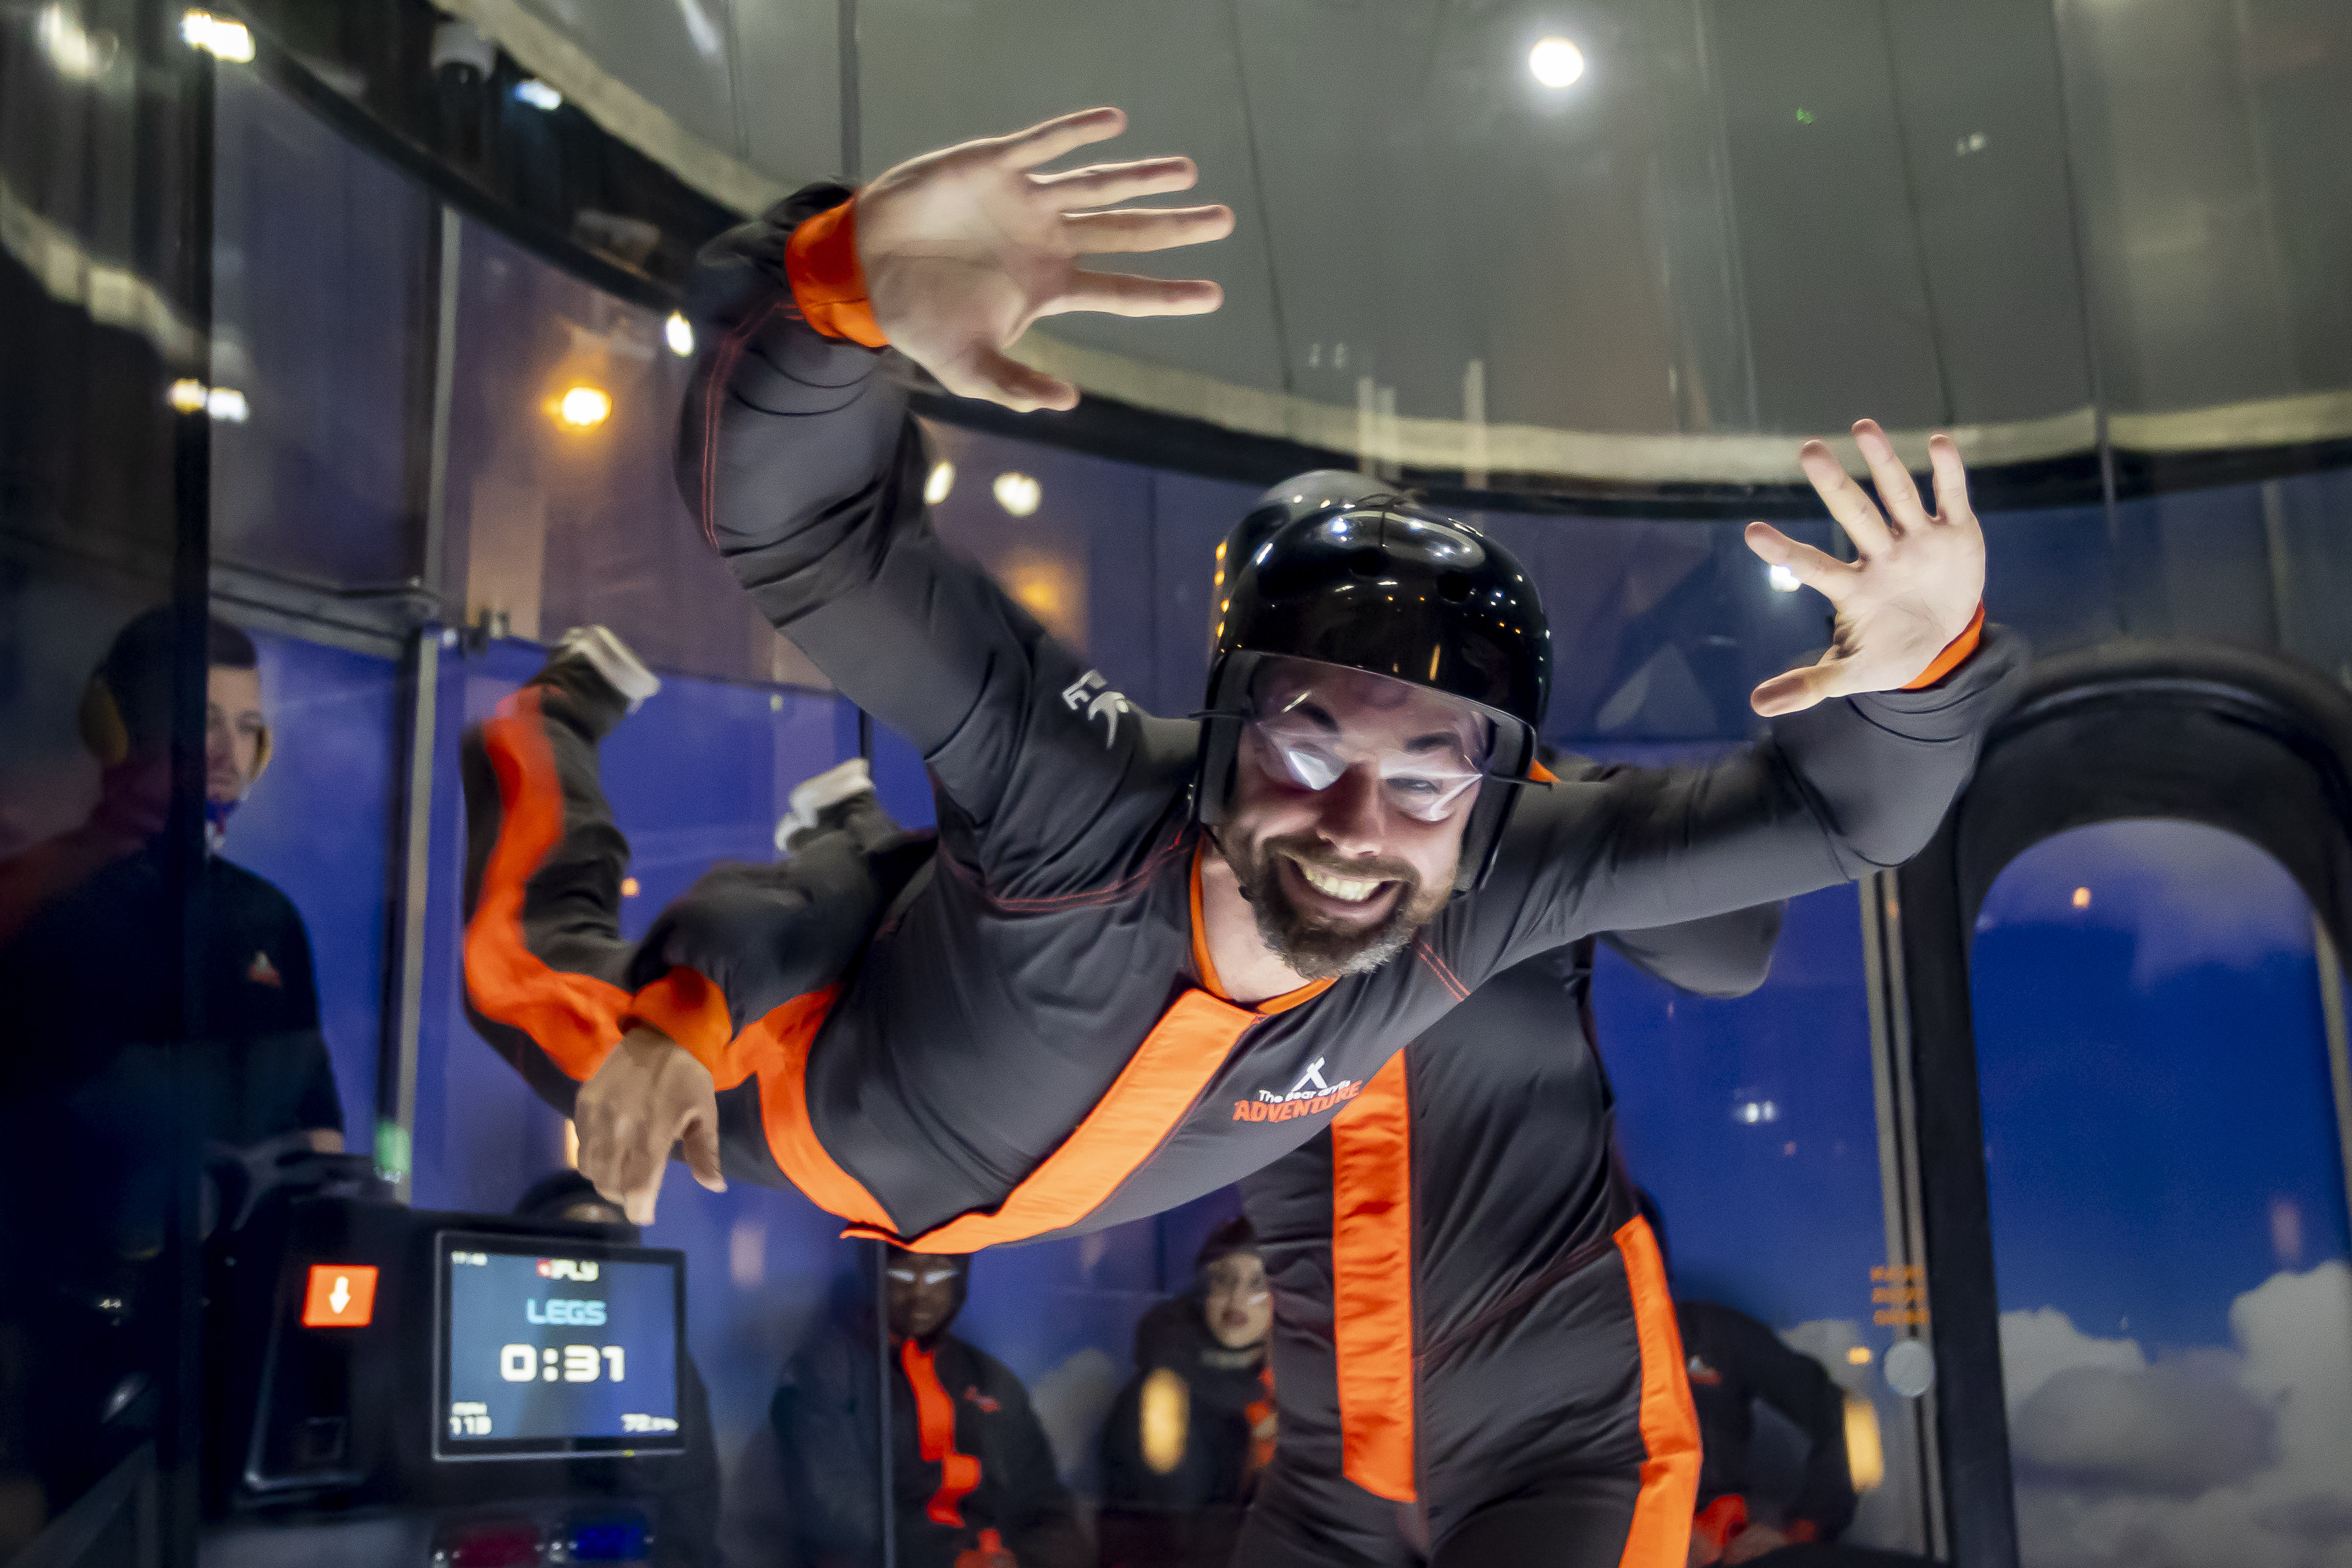 Man flies in iFLY indoor skydiving tunnel at The Bear Grylls Adventure Birmingham